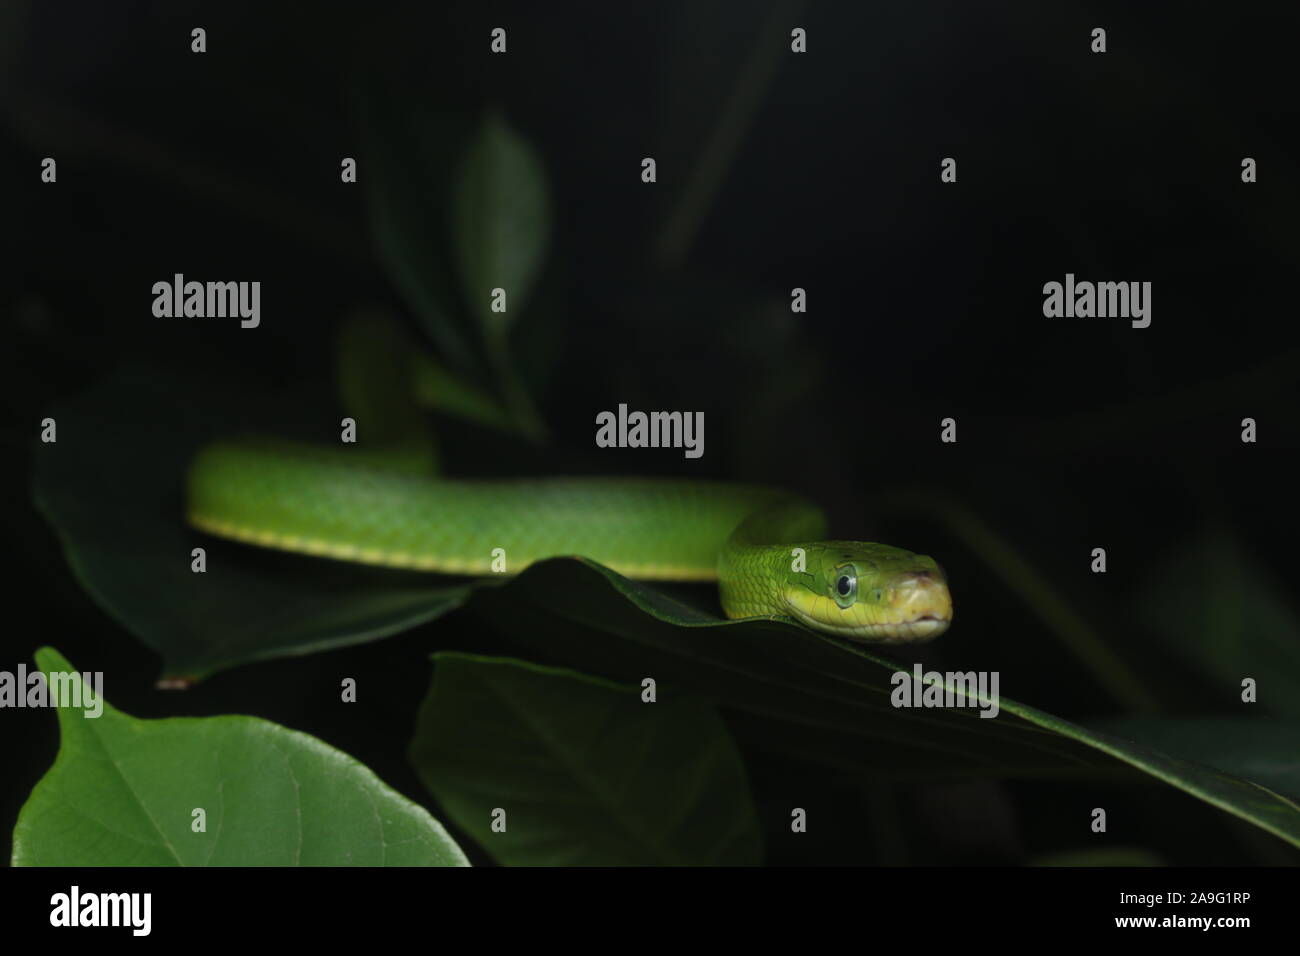 Gonyosoma prasinum, verde abalorio serpiente, verde o verde serpiente rata bush ratsnake Foto de stock